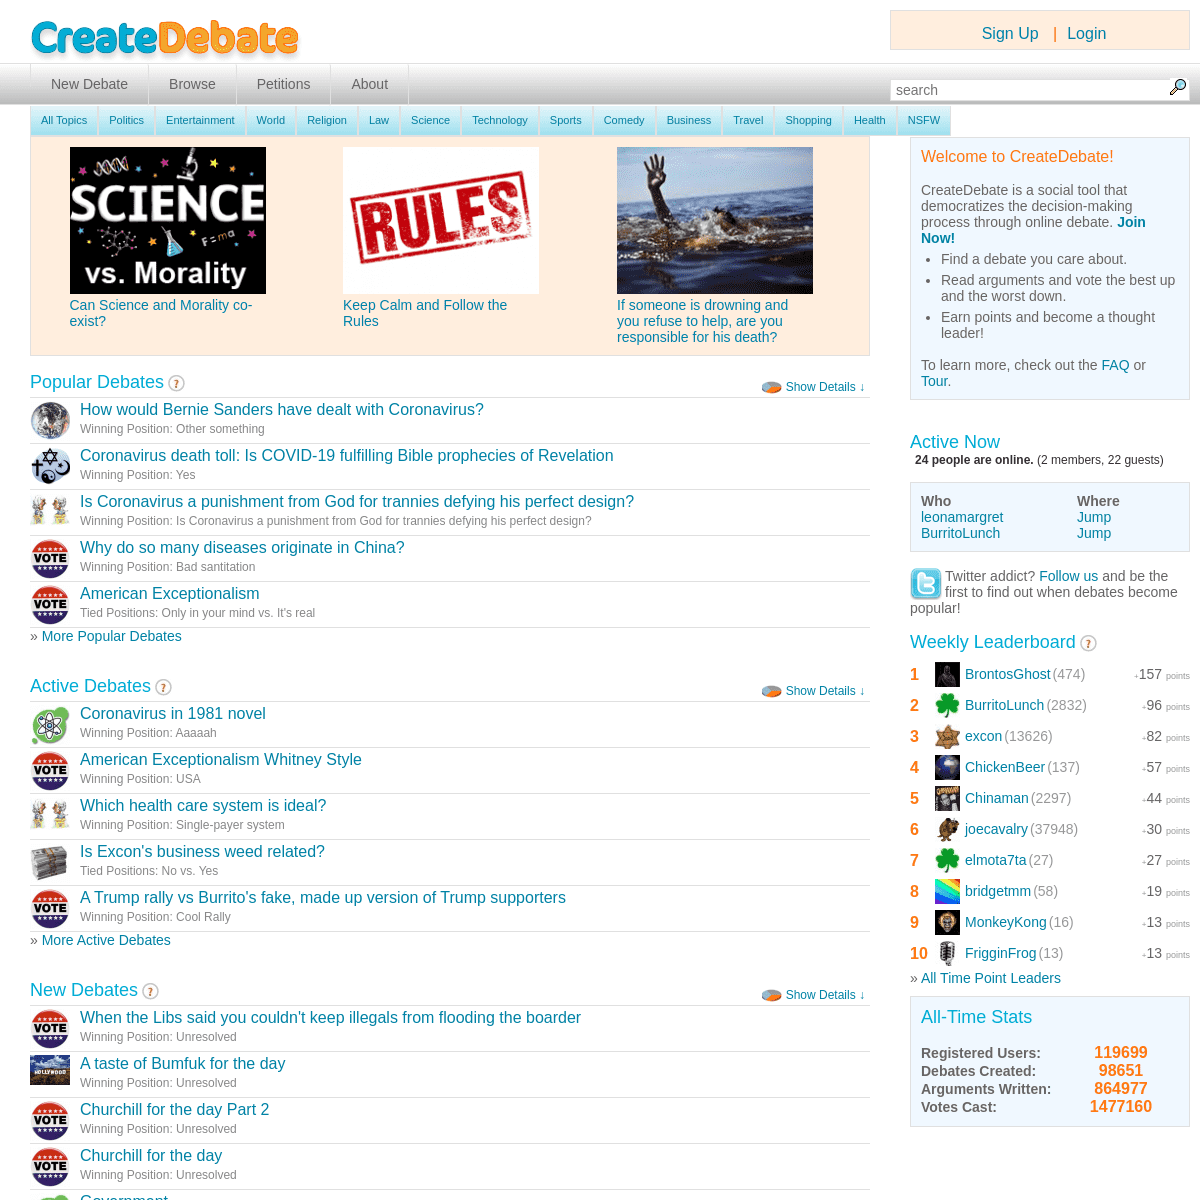 A complete backup of createdebate.com